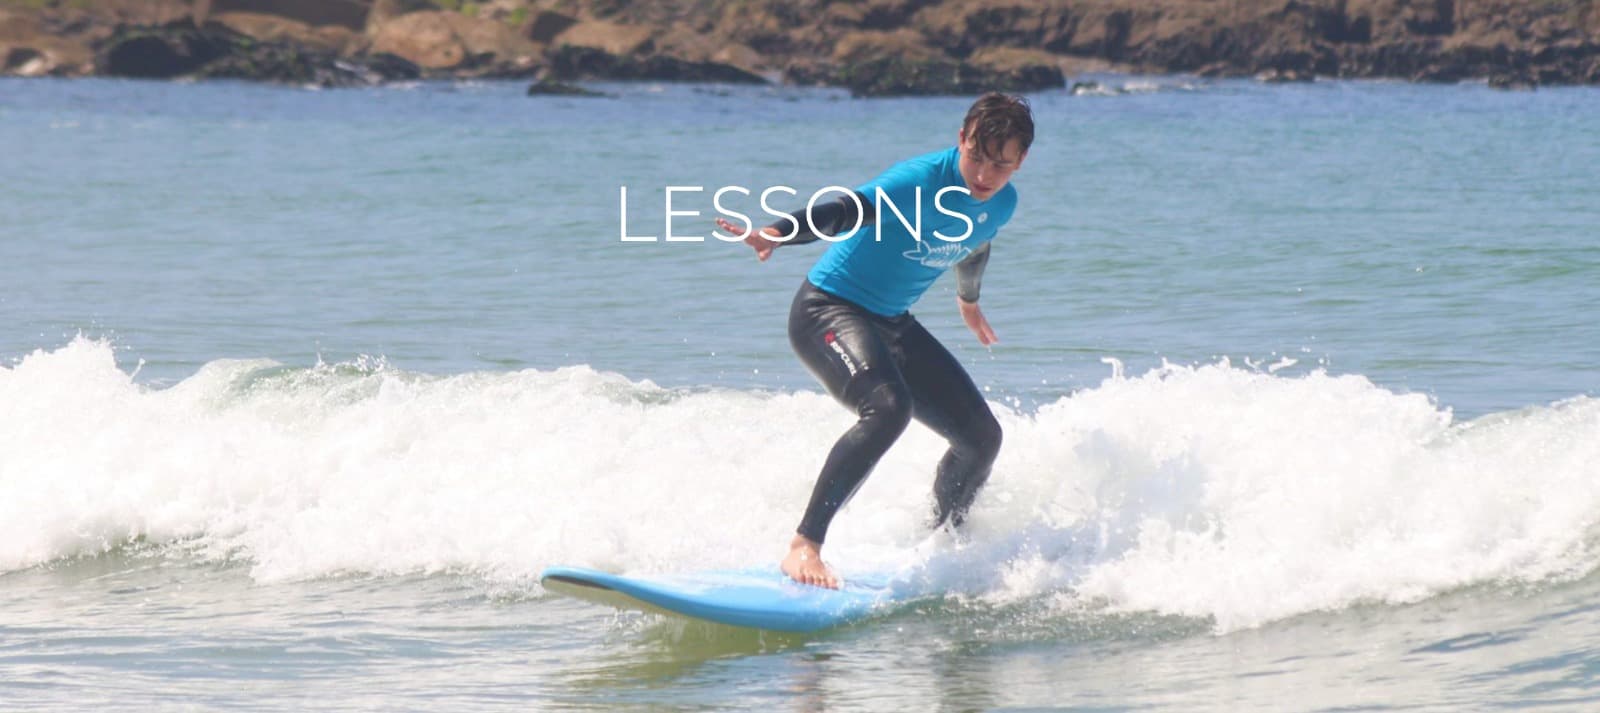 Surf in Porto: Classes at “Fish Surf School” 🏄‍♂️